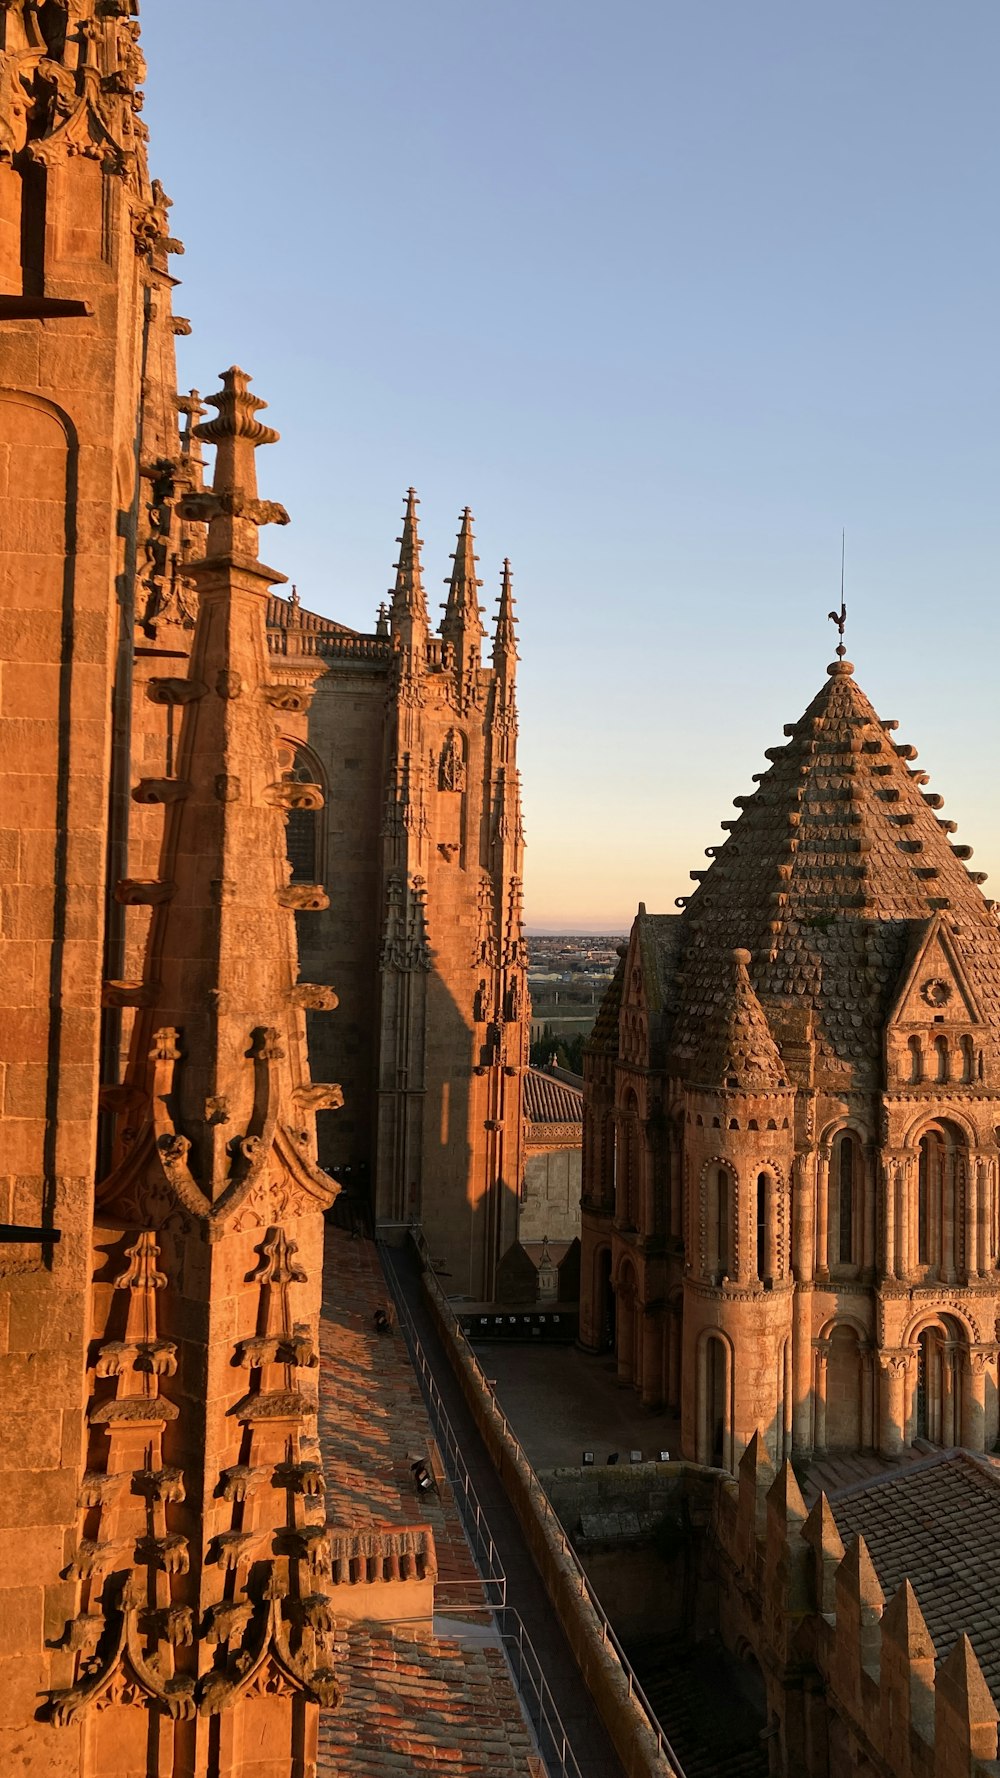 Una vista di una cattedrale da un punto di vista alto